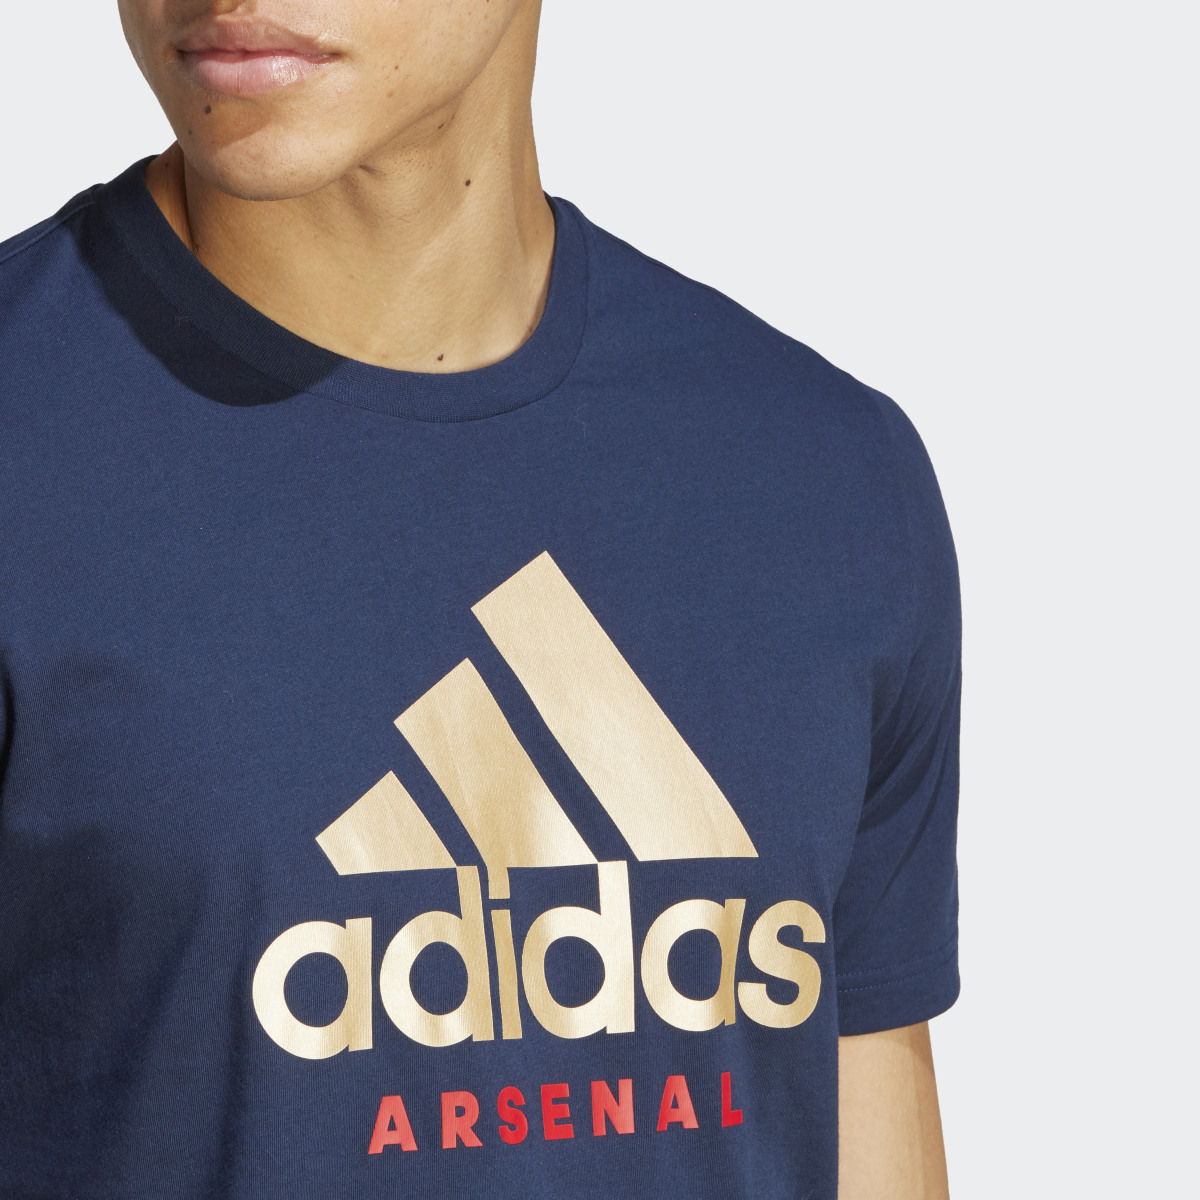 Adidas Camiseta Arsenal Street Graphic. 6